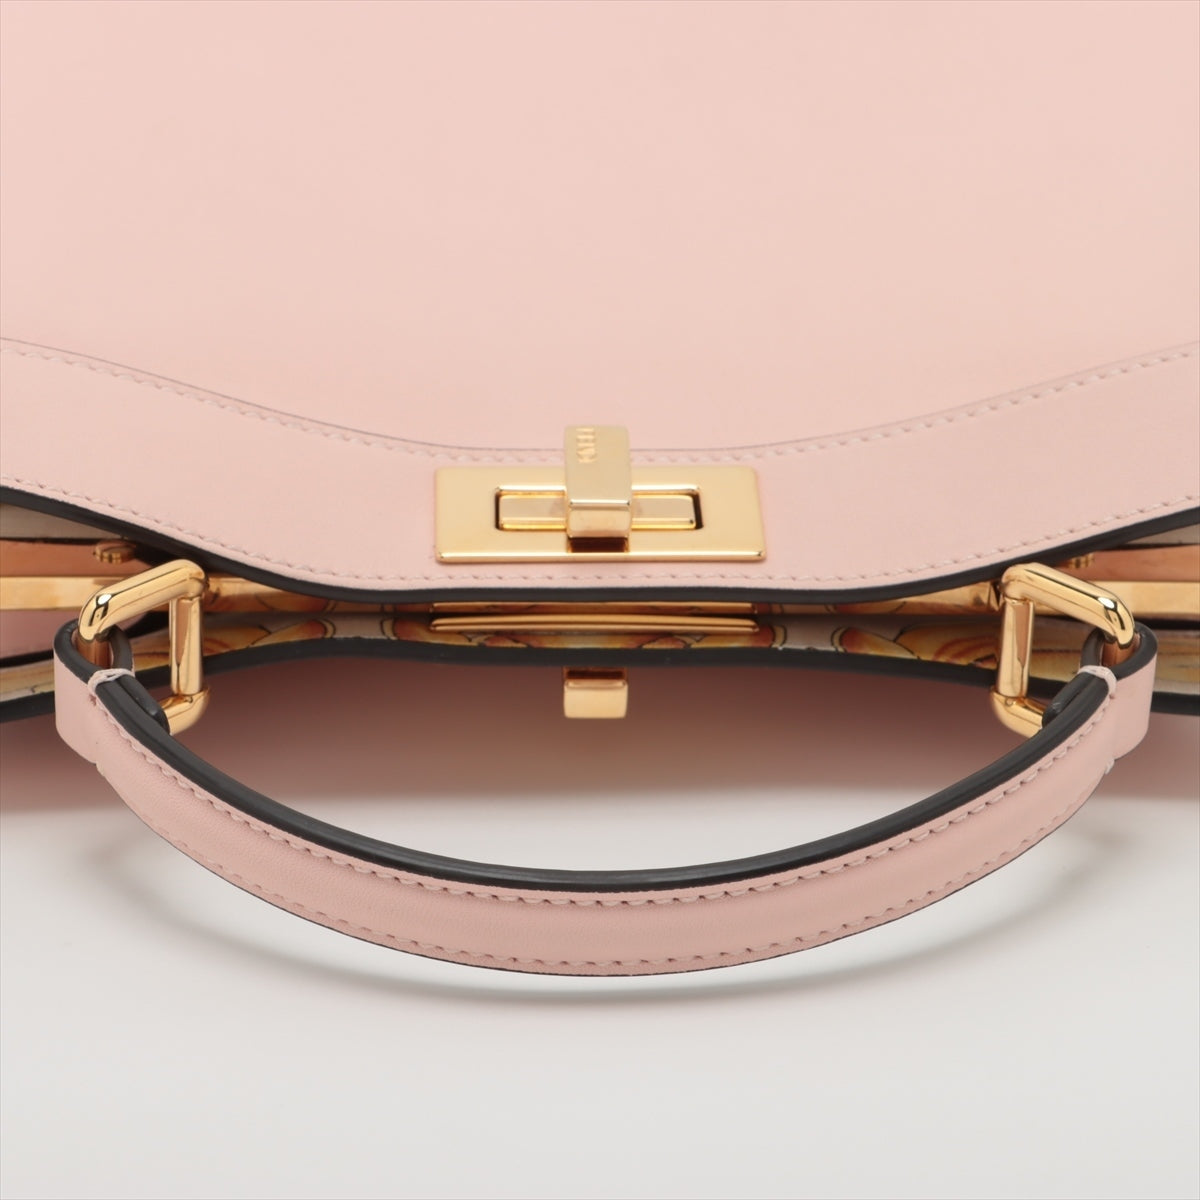 Fendi x Versace Peek-a-boo ICU Co., Ltd. Small Leather 2 Way Handbag Pink 8BN327